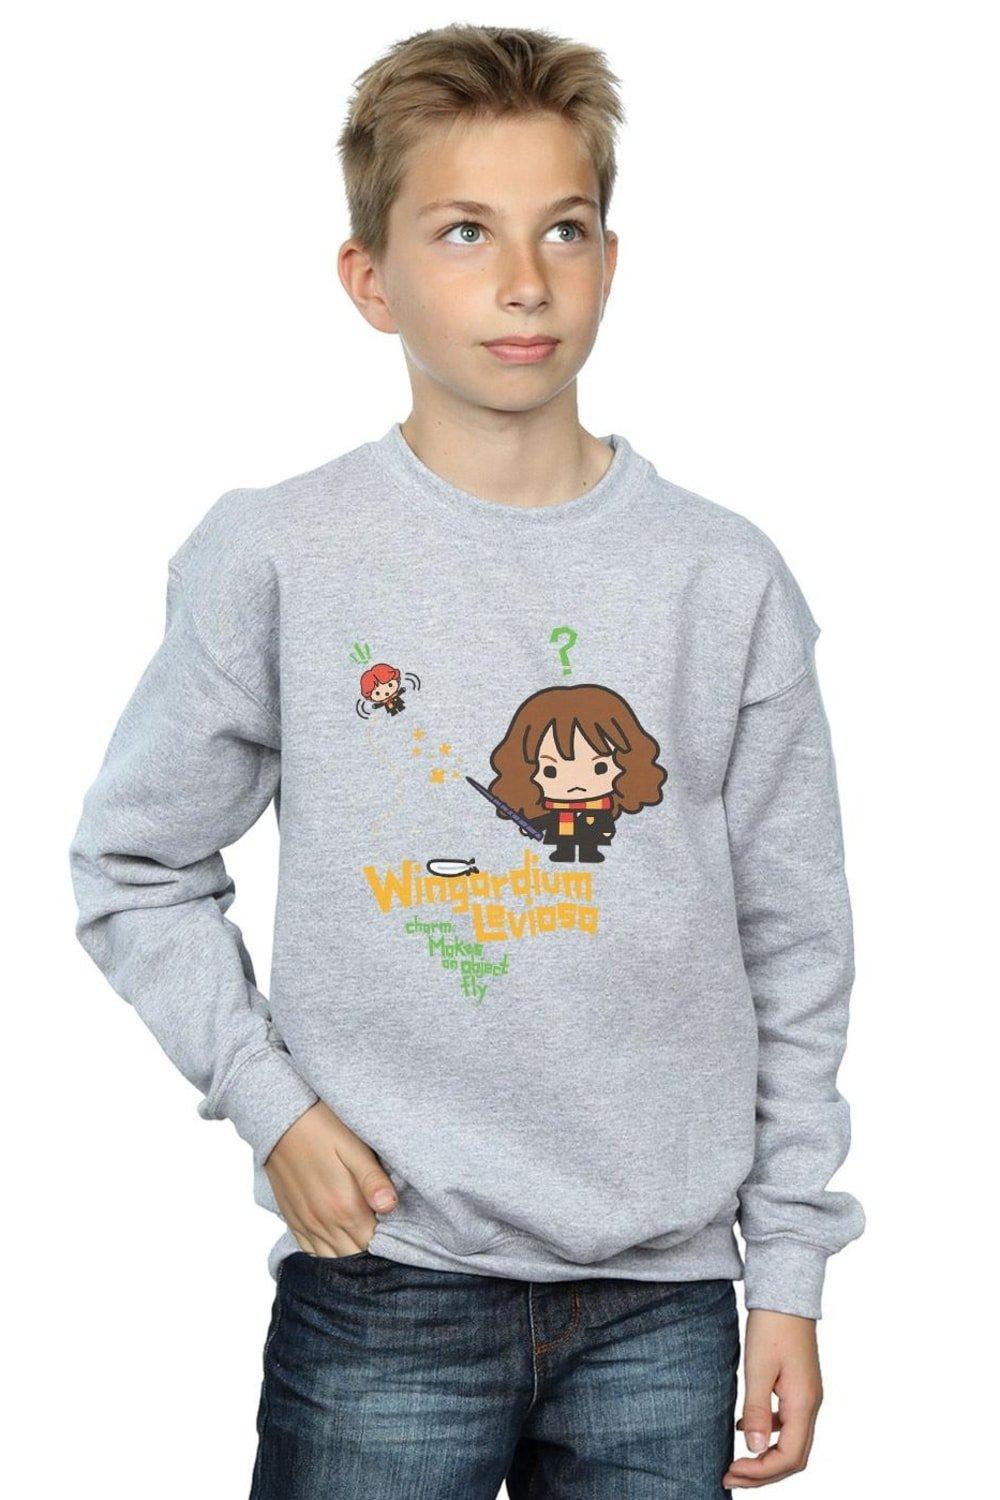 Wingardium Leviosa Hermione Sweatshirt